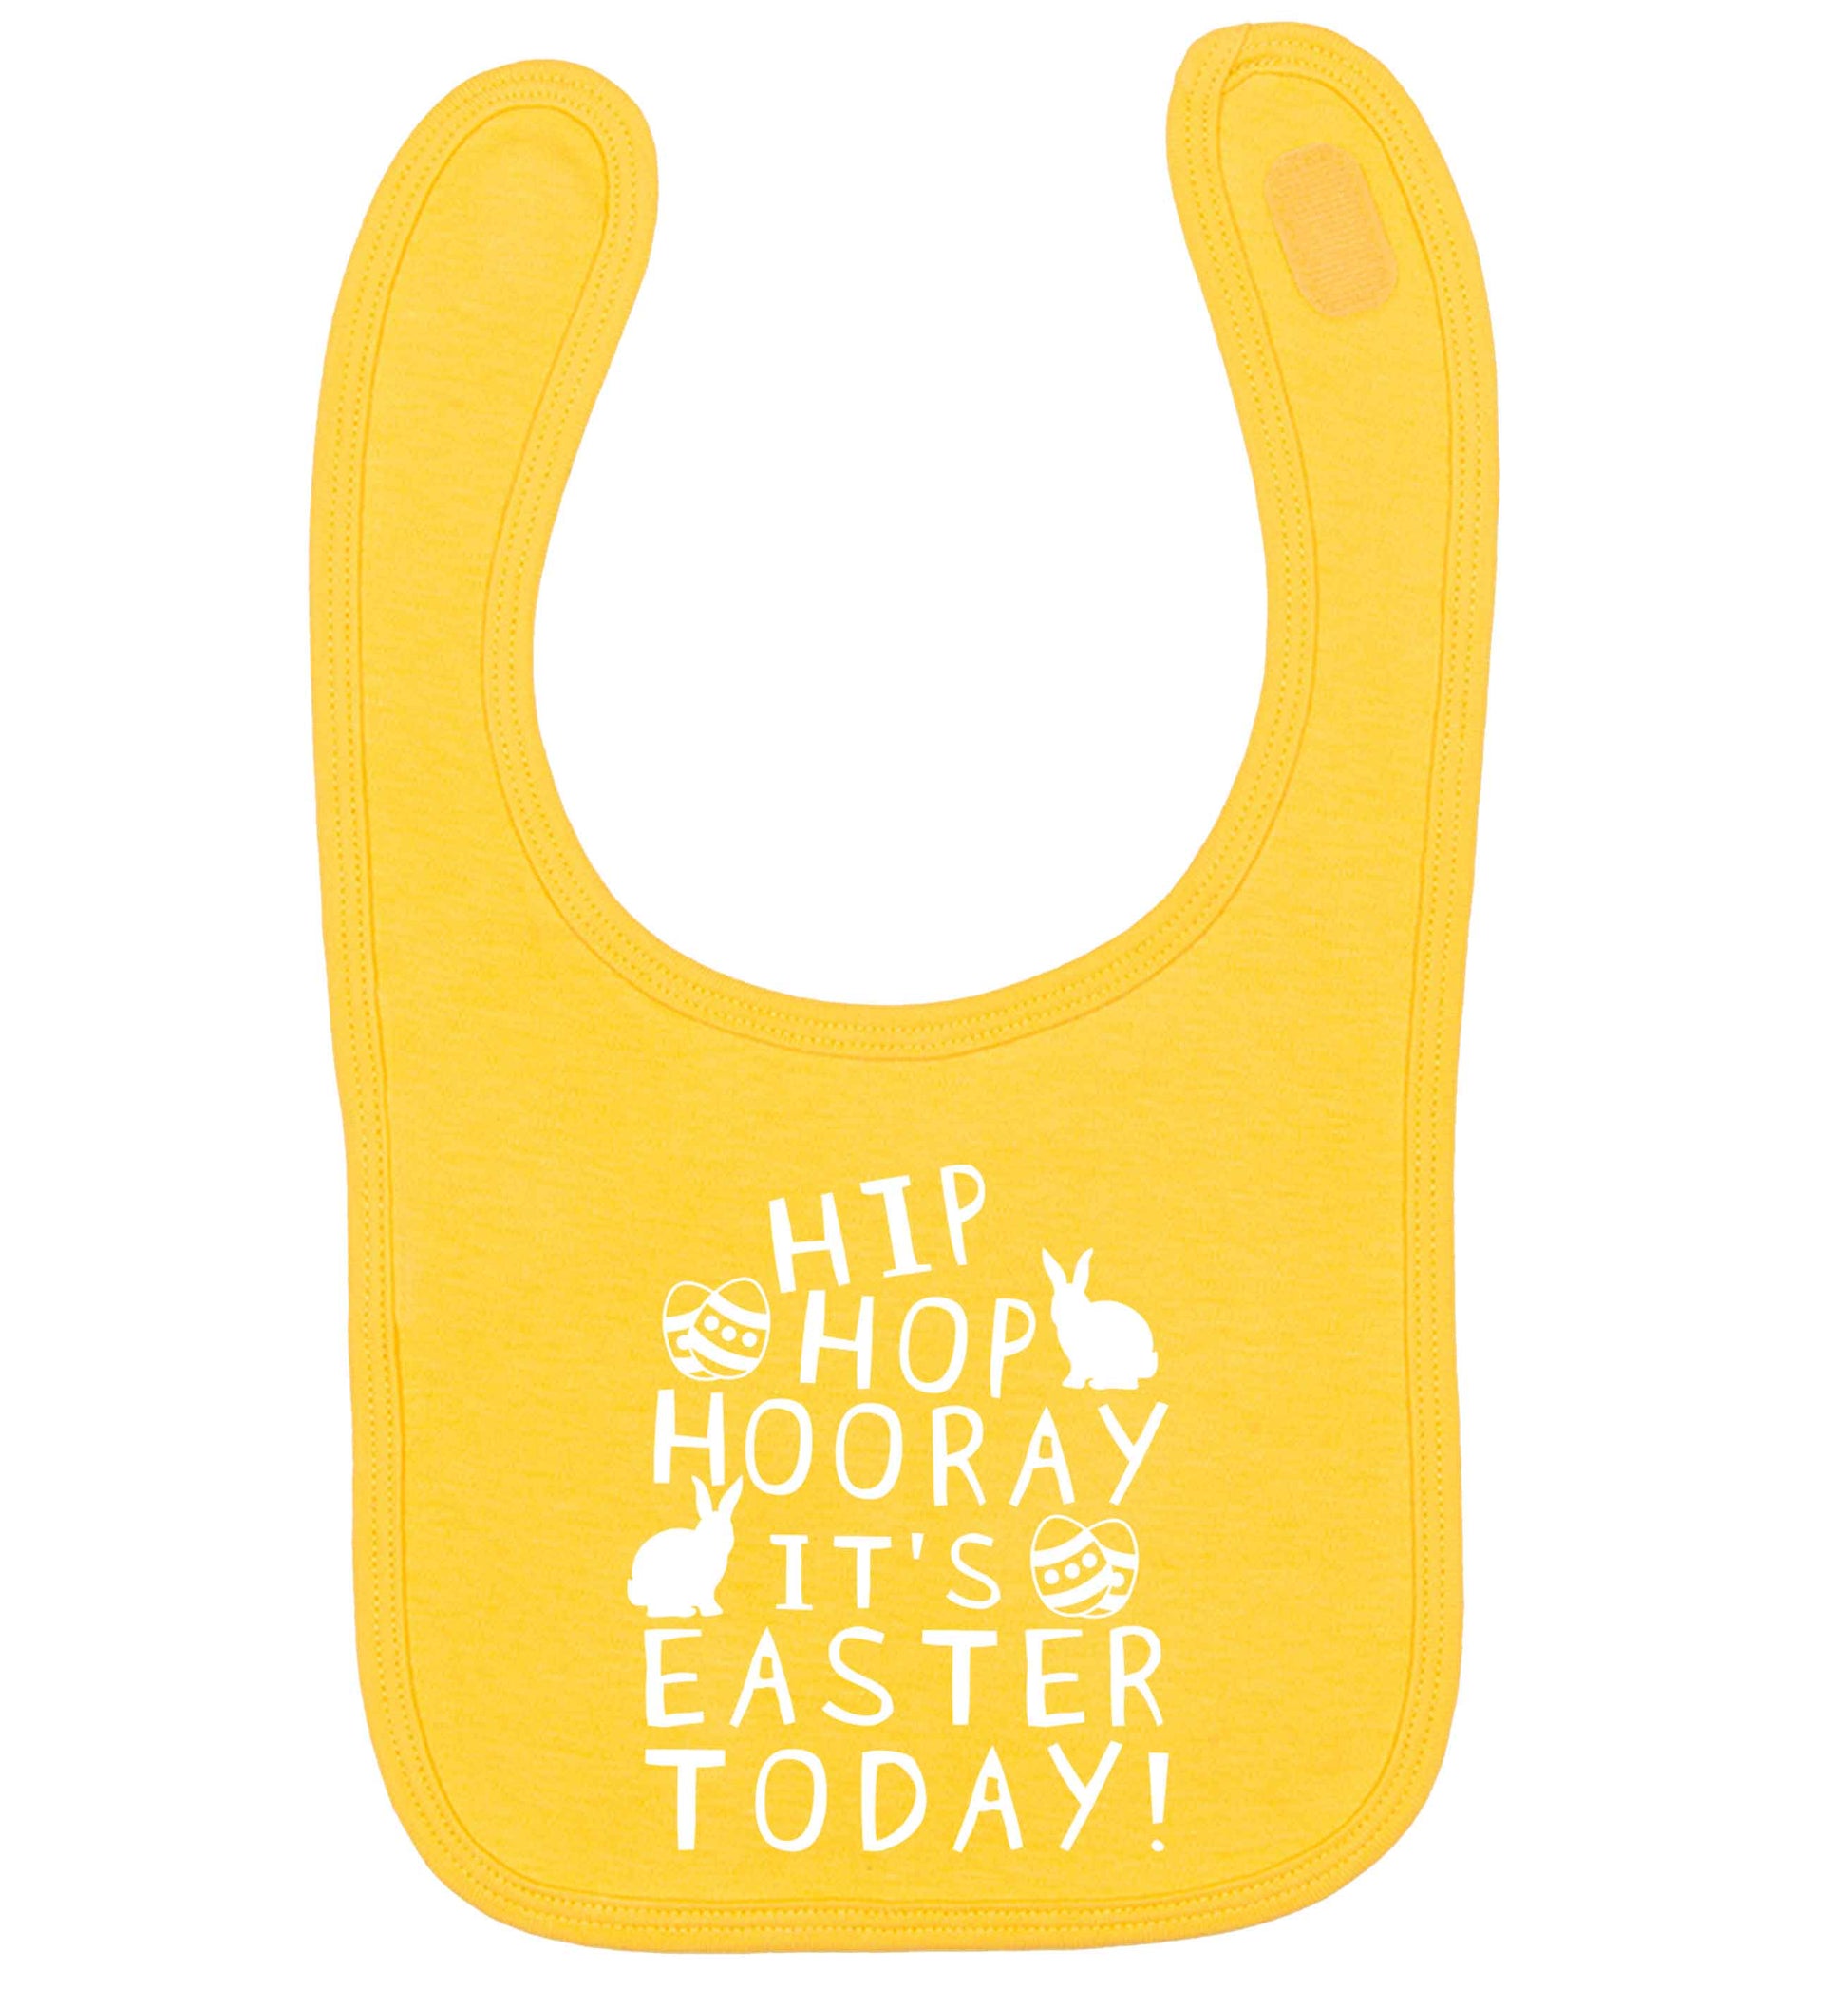 Hip hip hooray it's Easter today! yellow baby bib